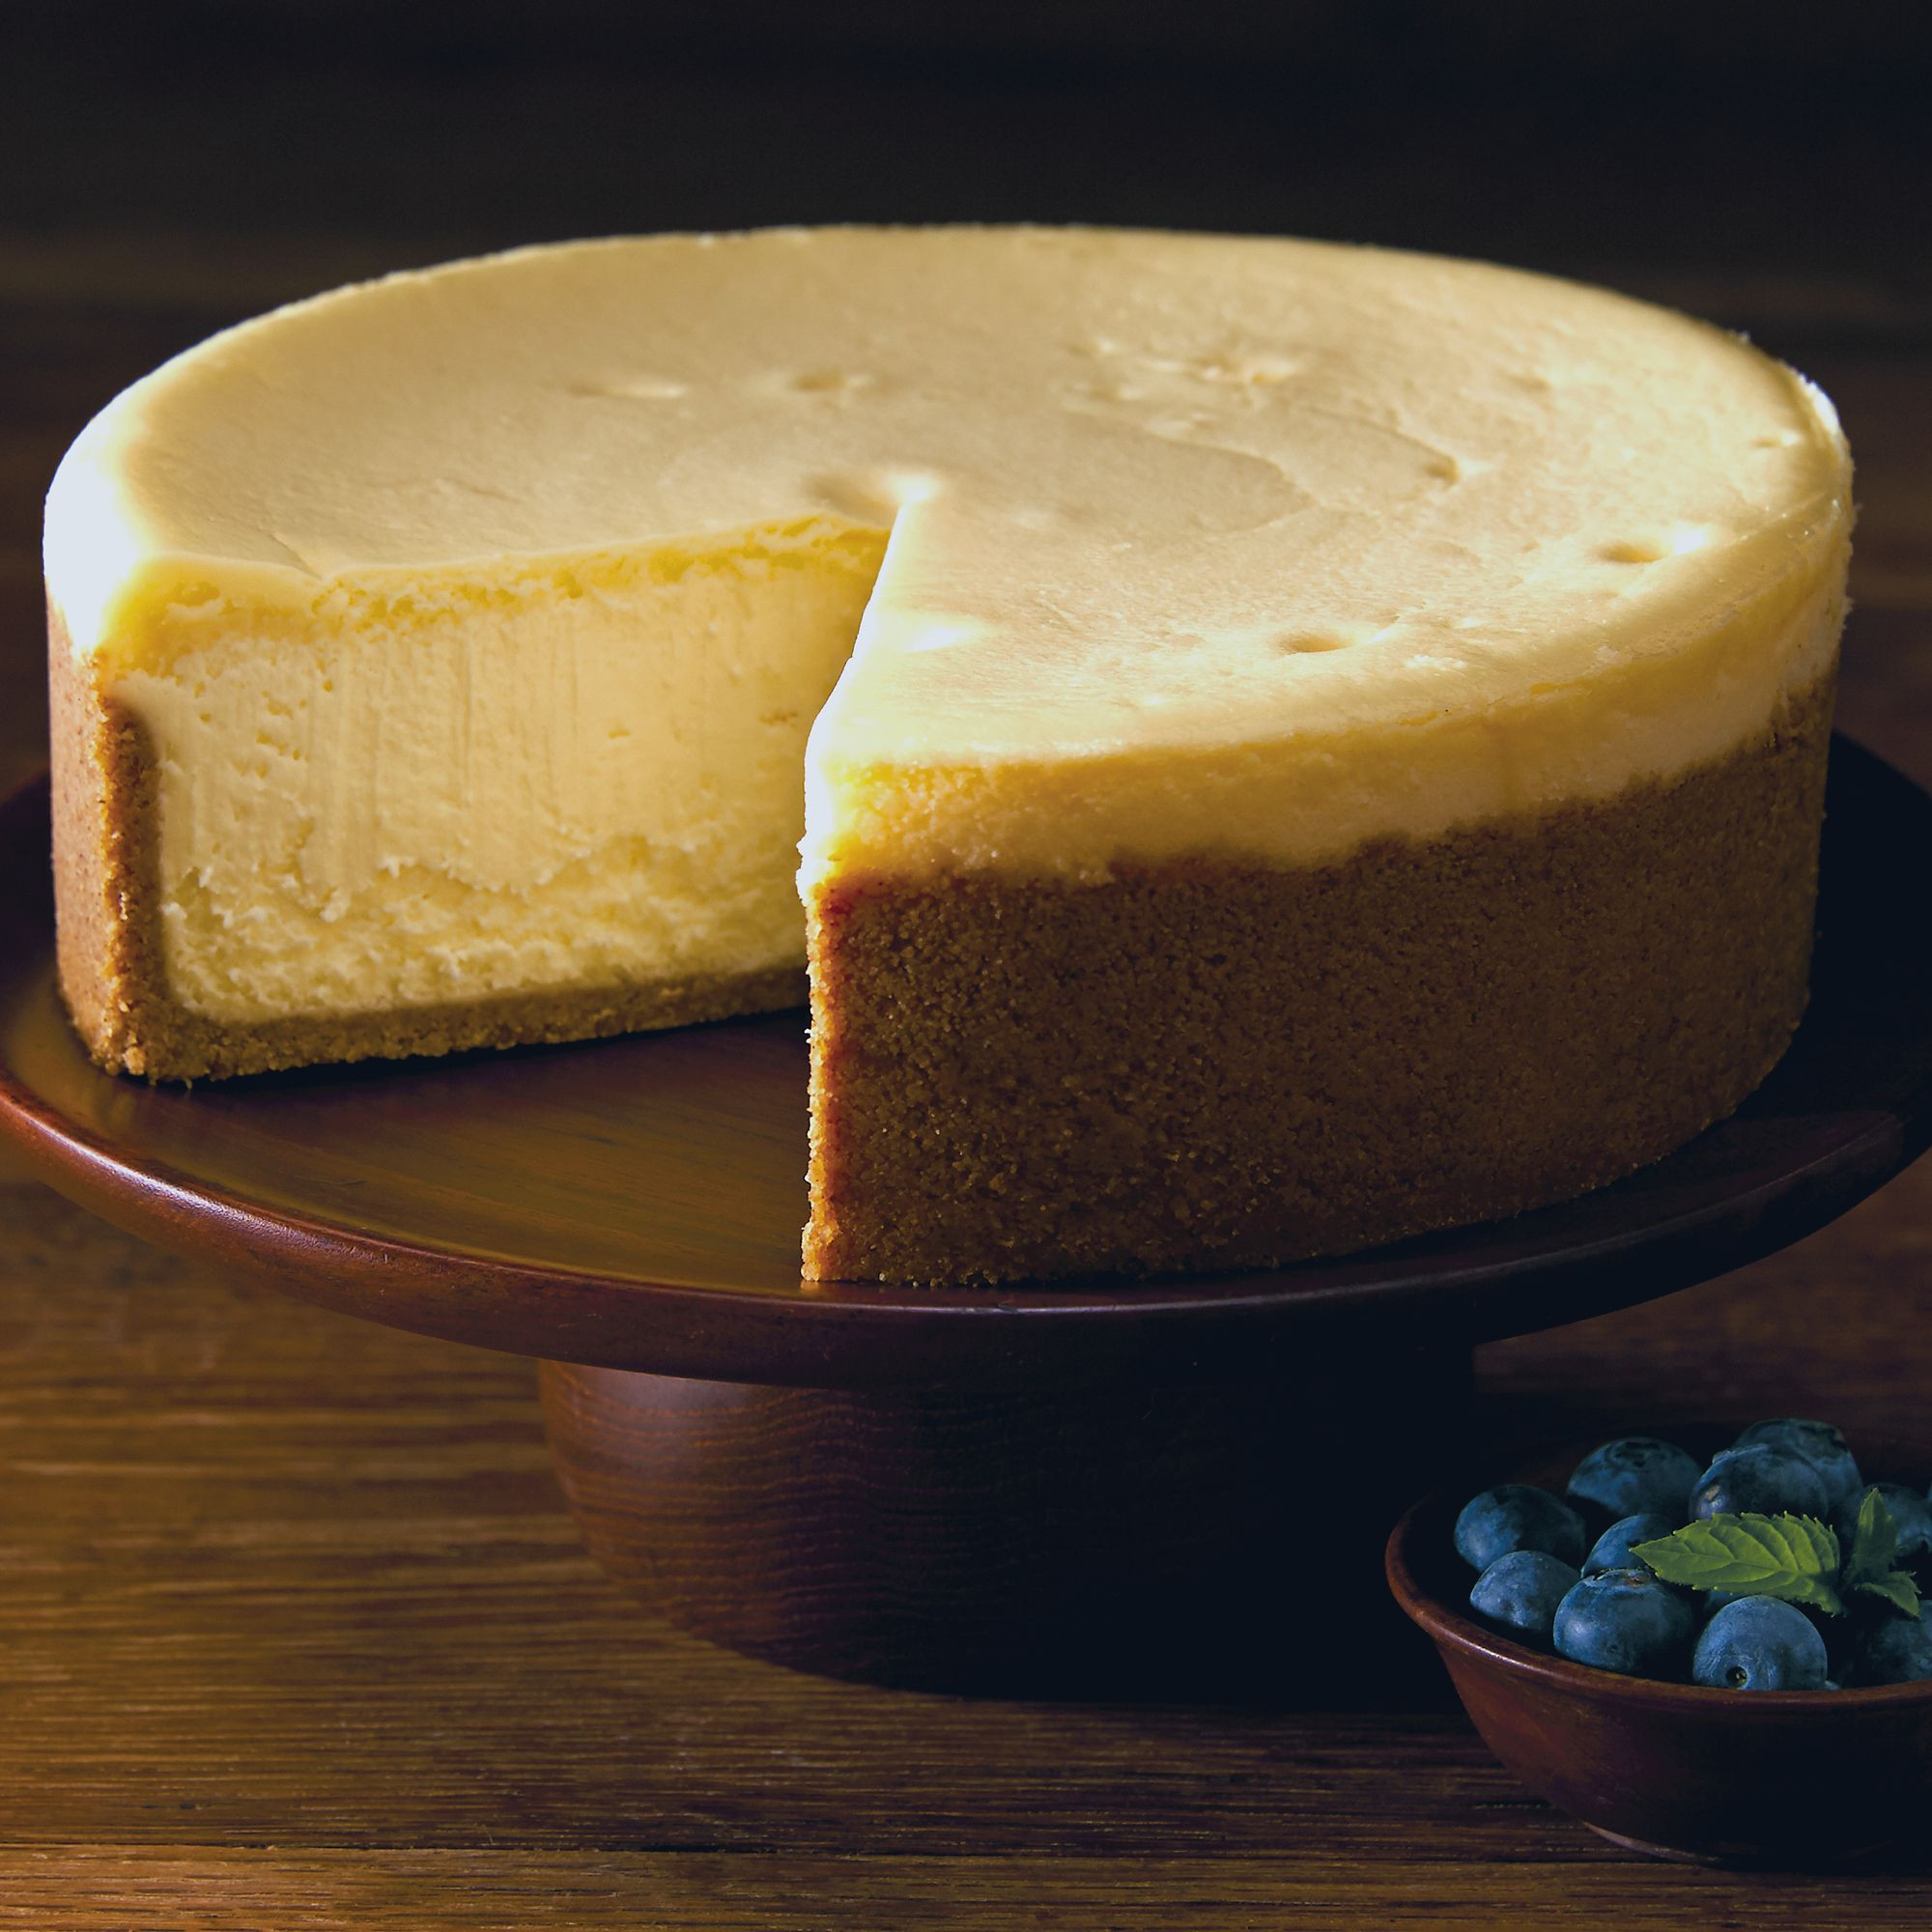 Original Cheesecake Recipe
 25 best ideas about Original cheesecake recipe on